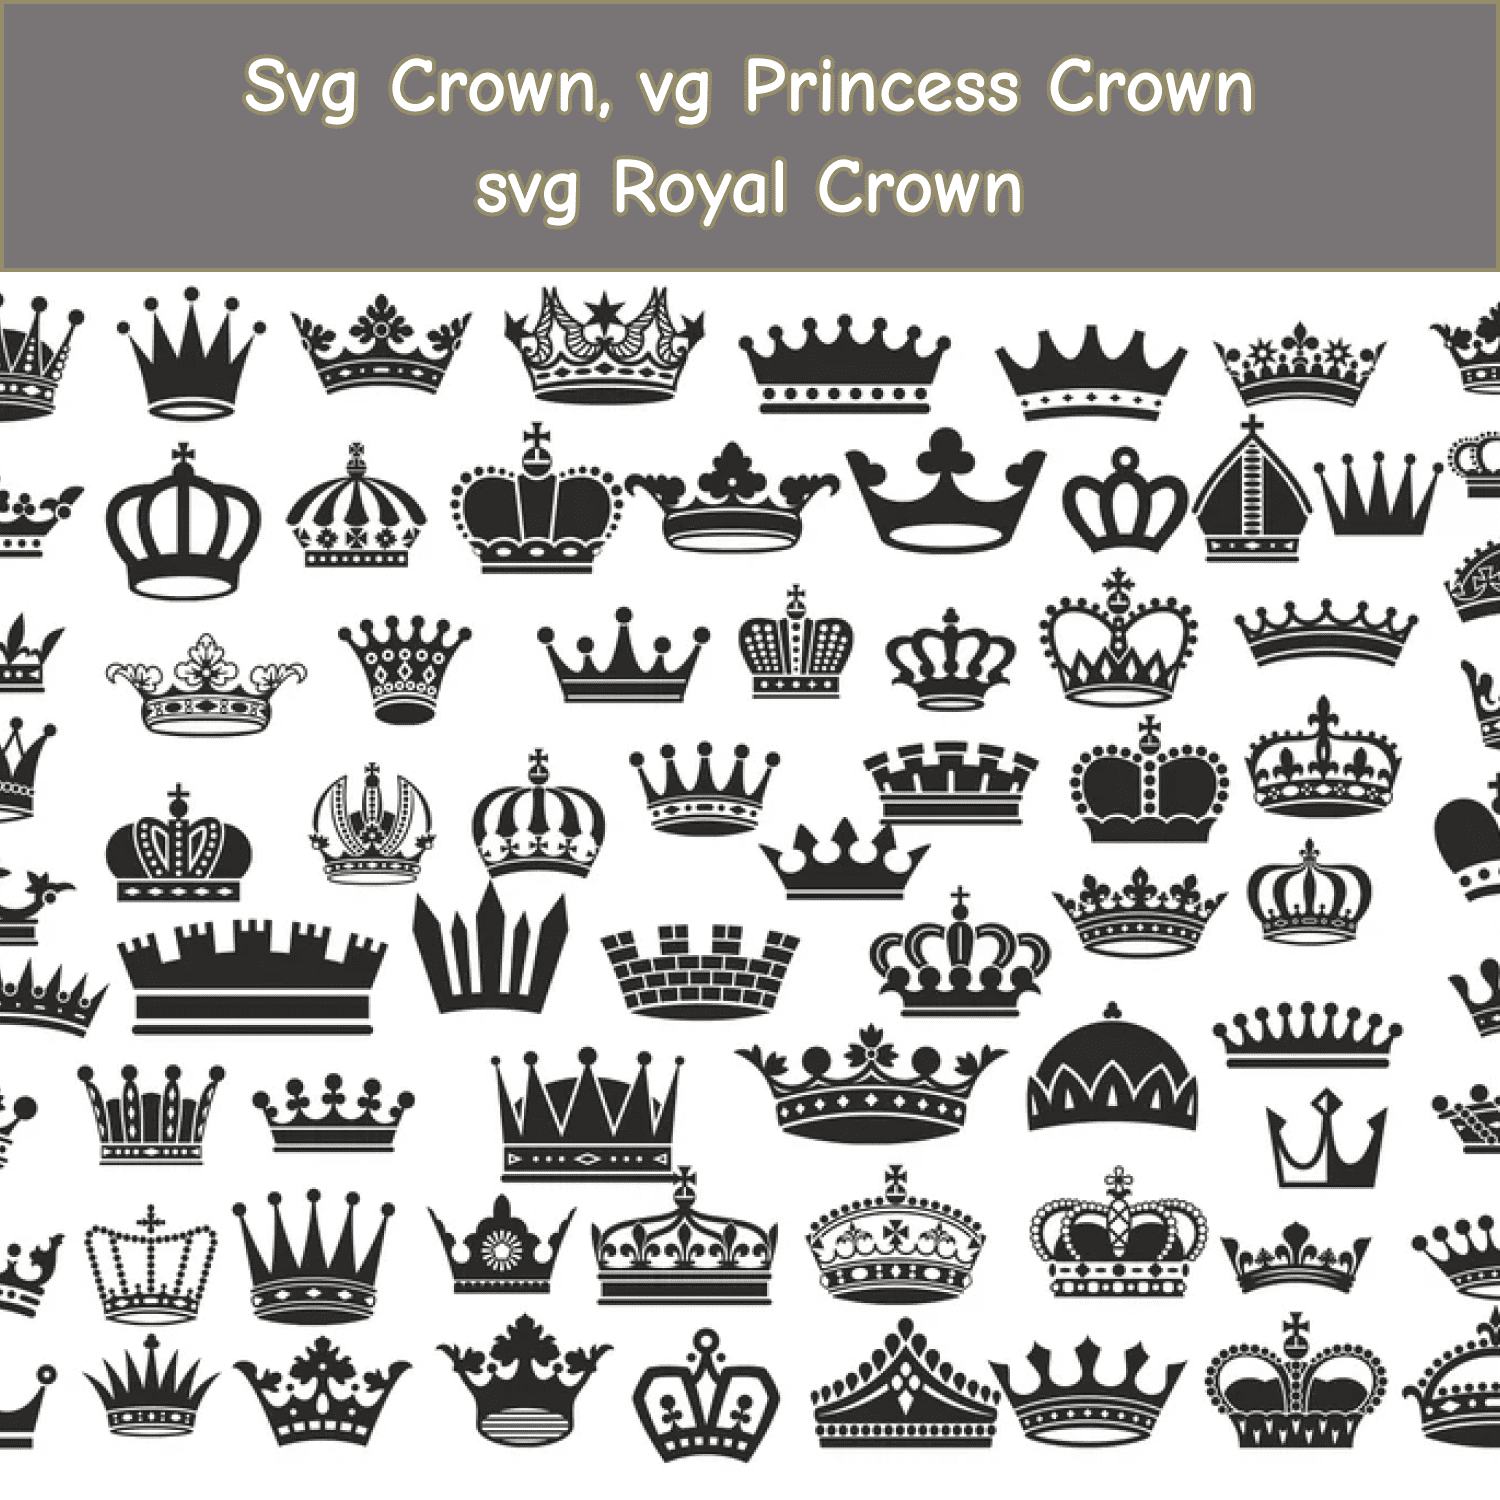 Royal Princess Crown Svg image.